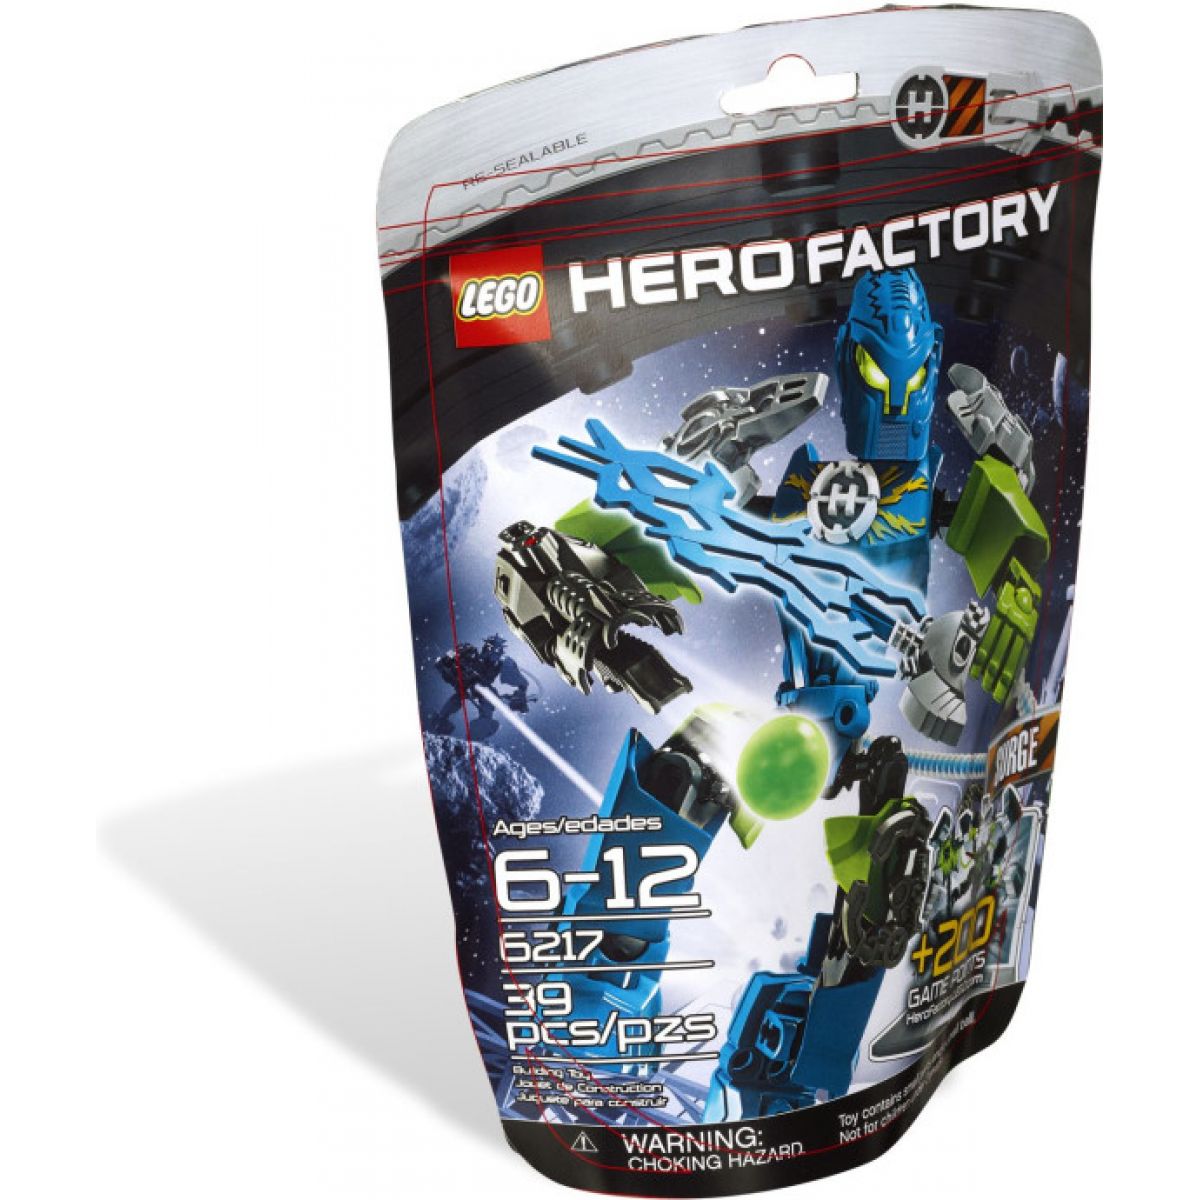 LEGO HERO FACTORY 6217 SURGE